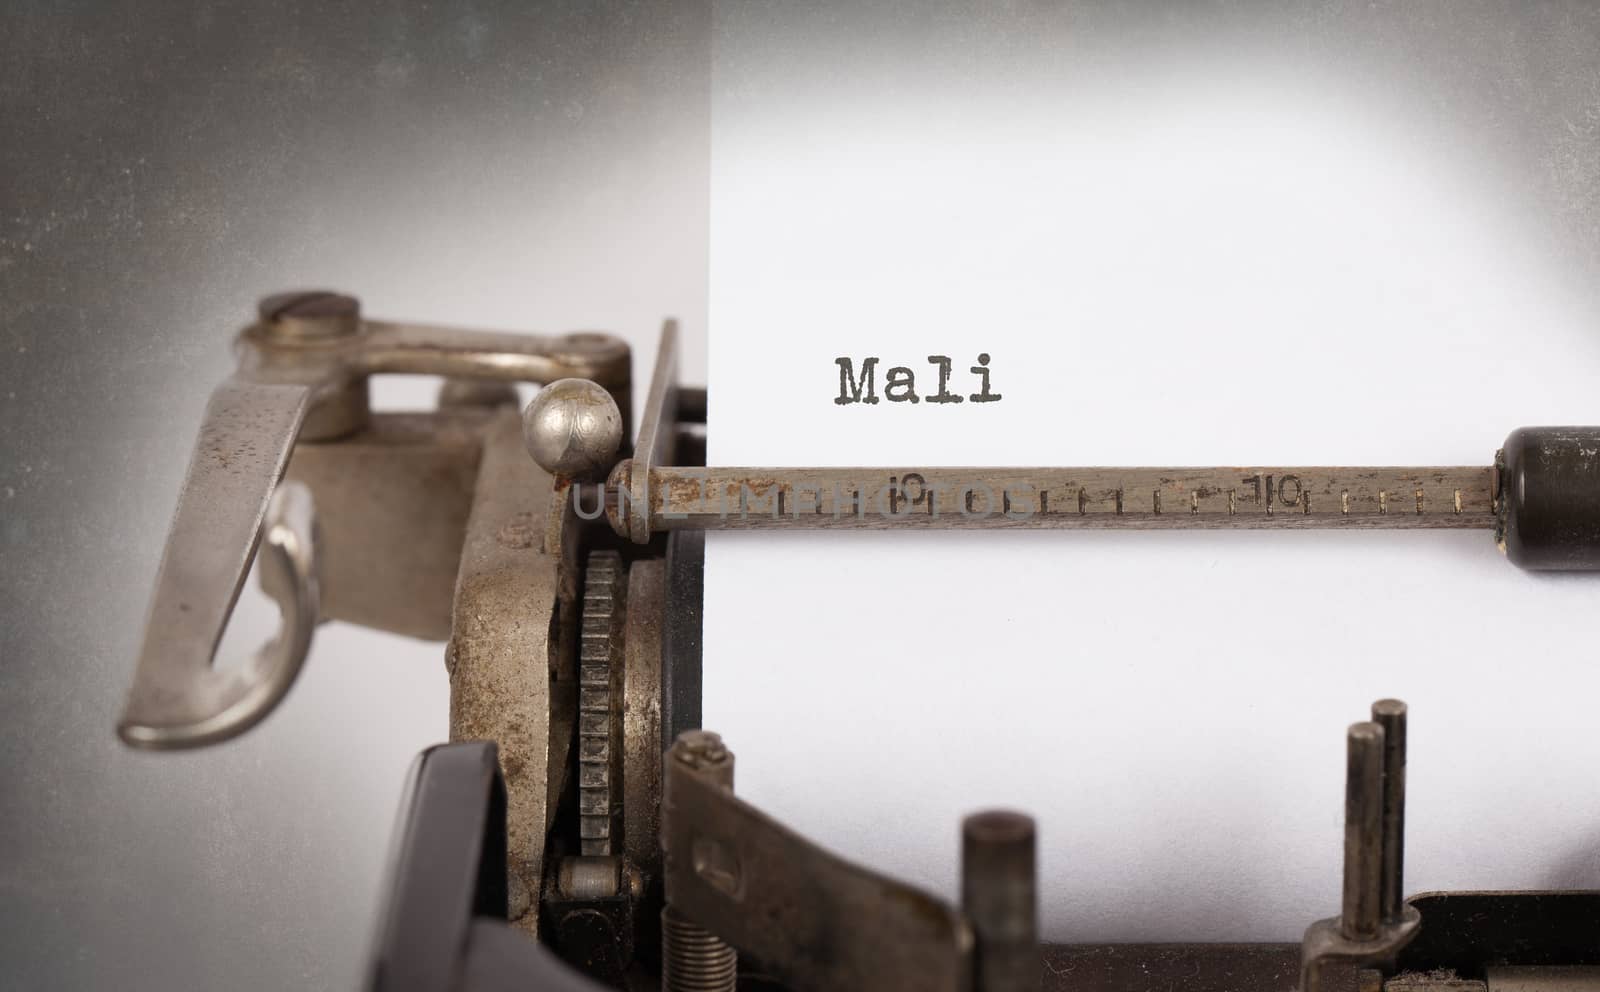 Old typewriter - Mali by michaklootwijk